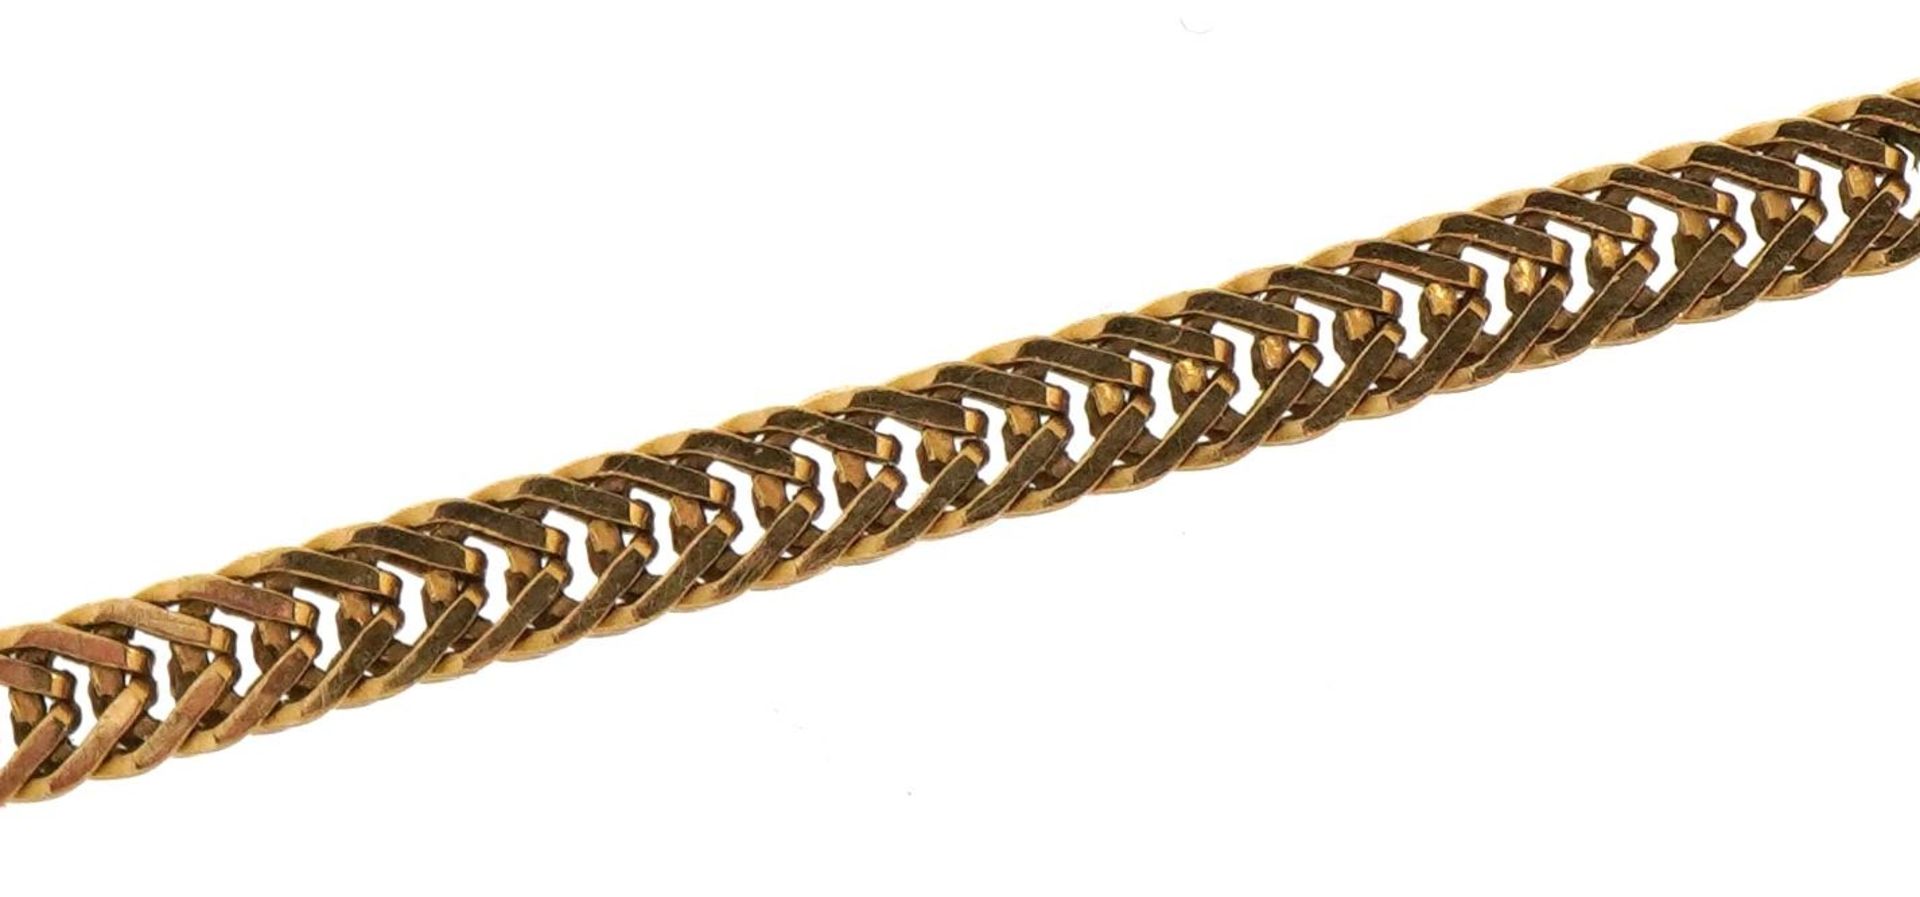 9ct gold snake link bracelet, 18.5cm in length, 1.9g